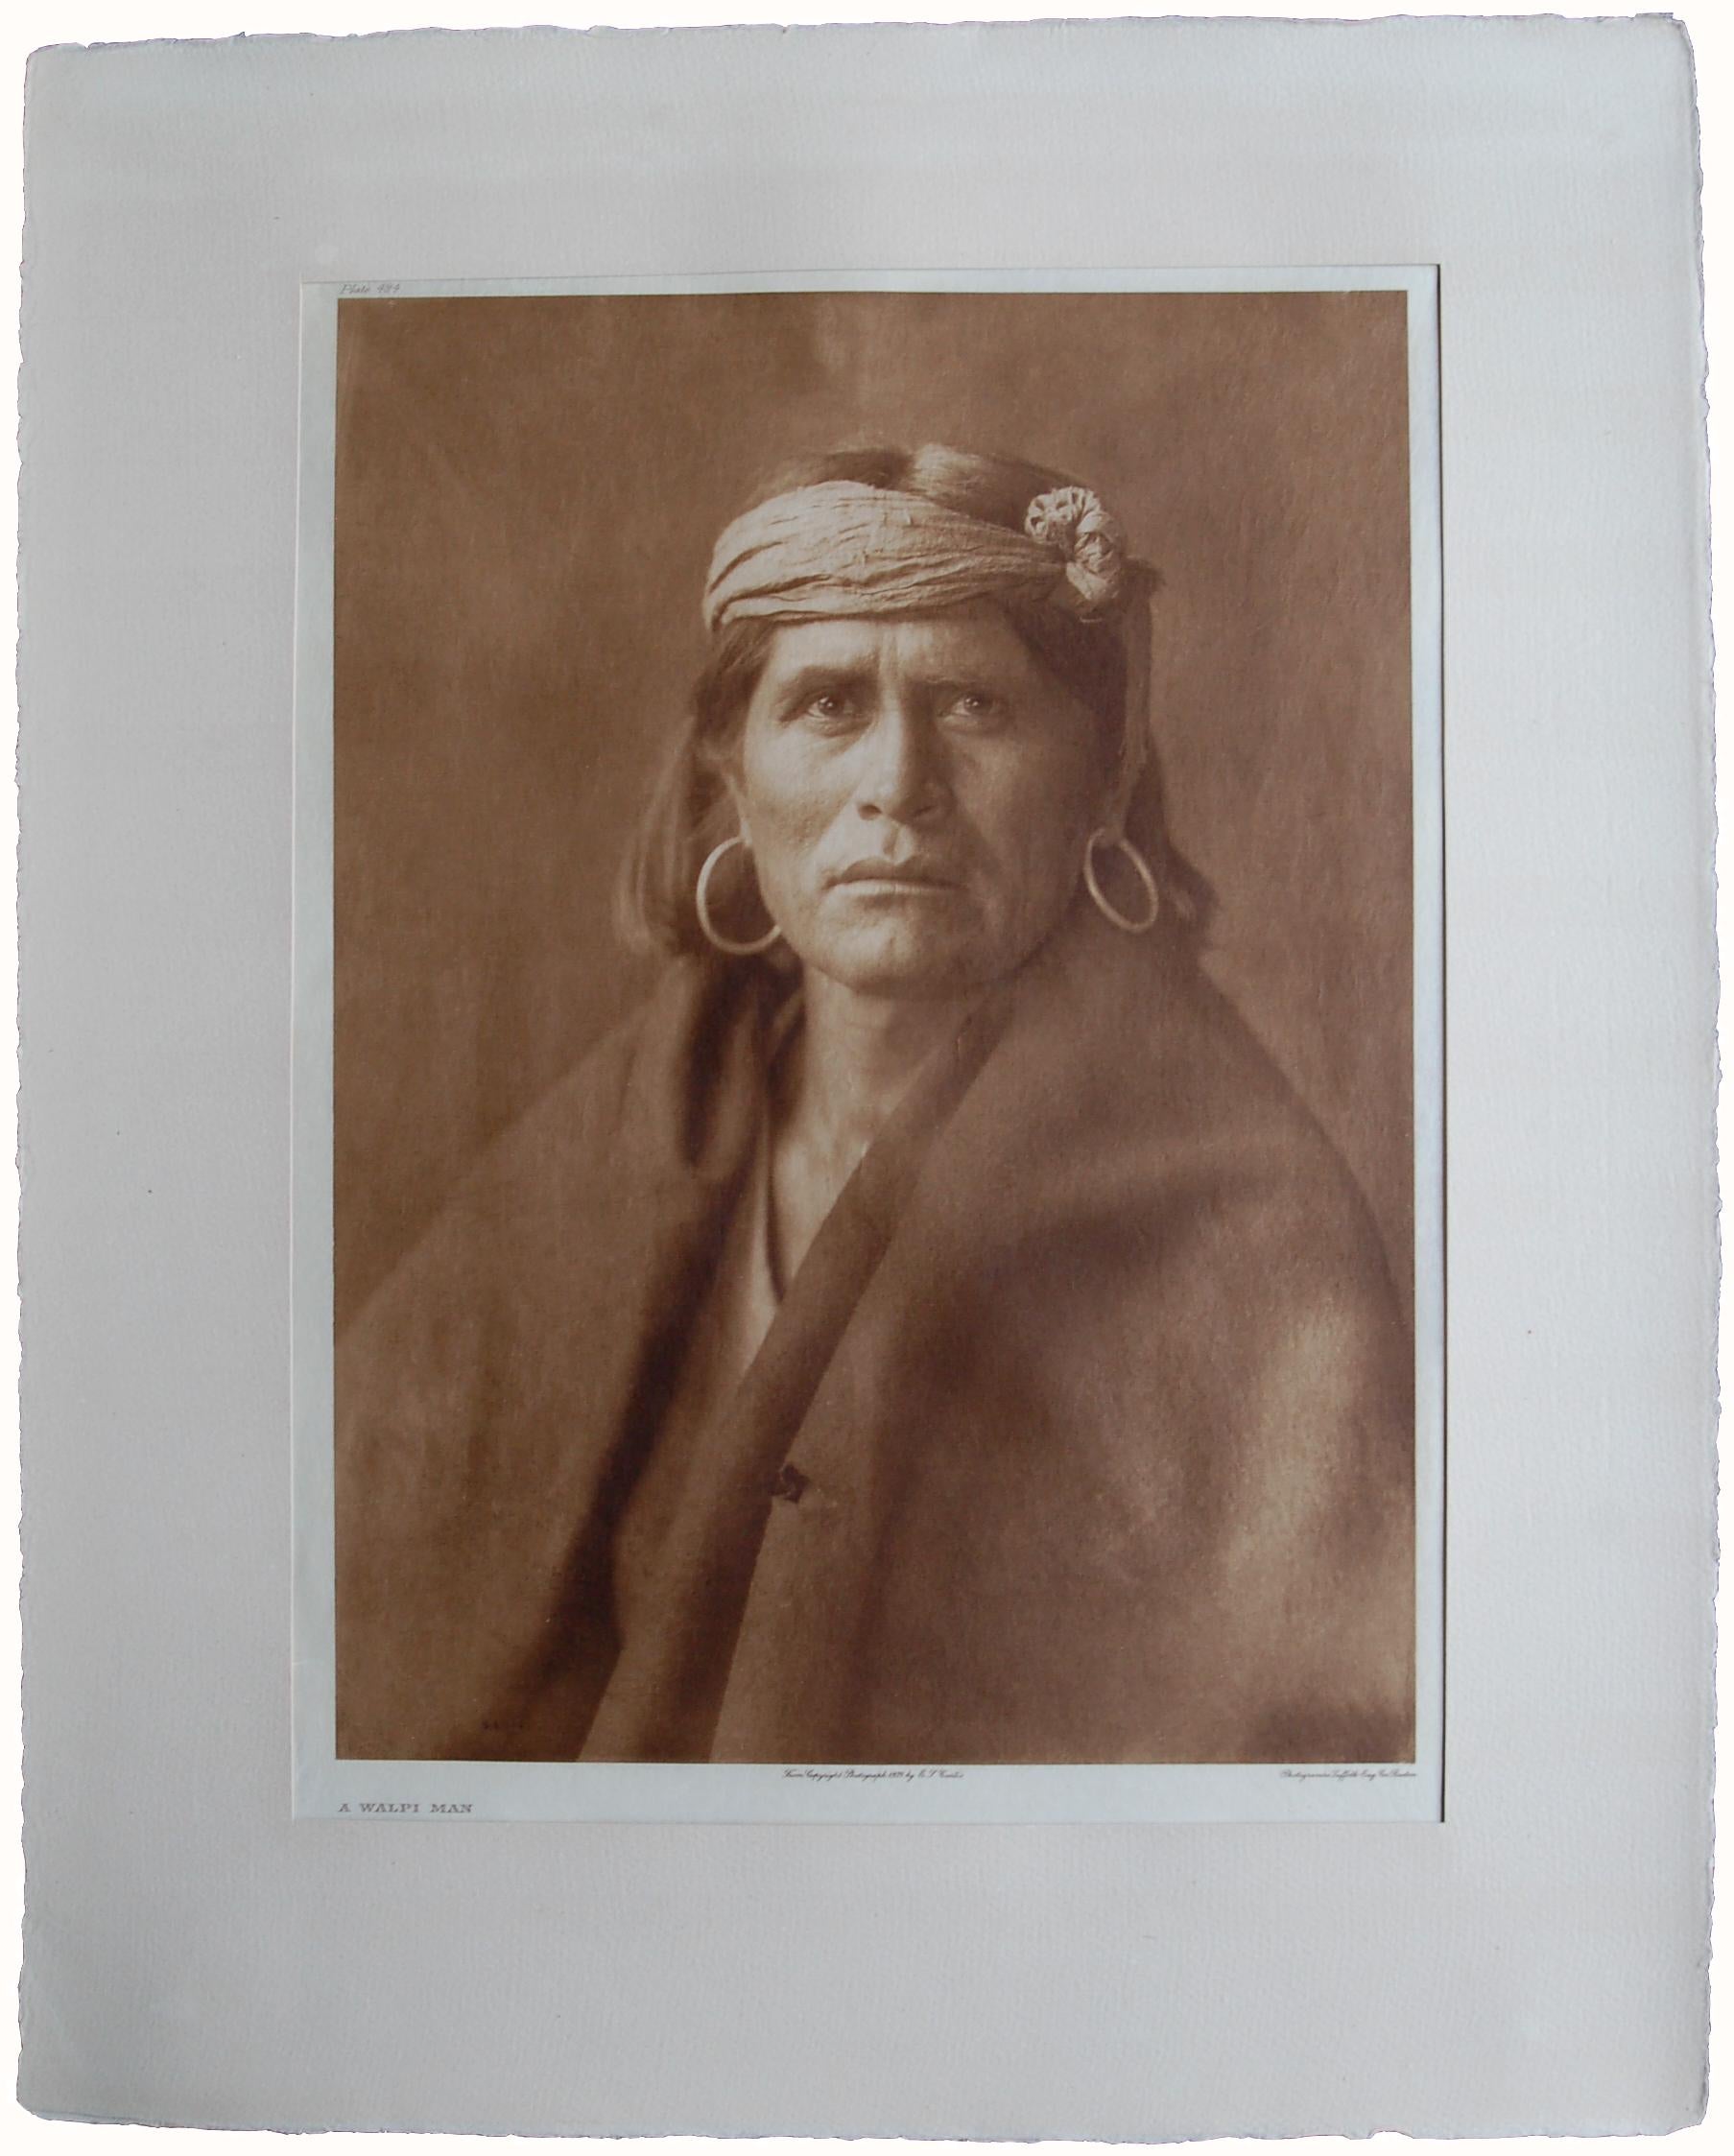 Edward S. Curtis Portrait Photograph - A Walpi Man